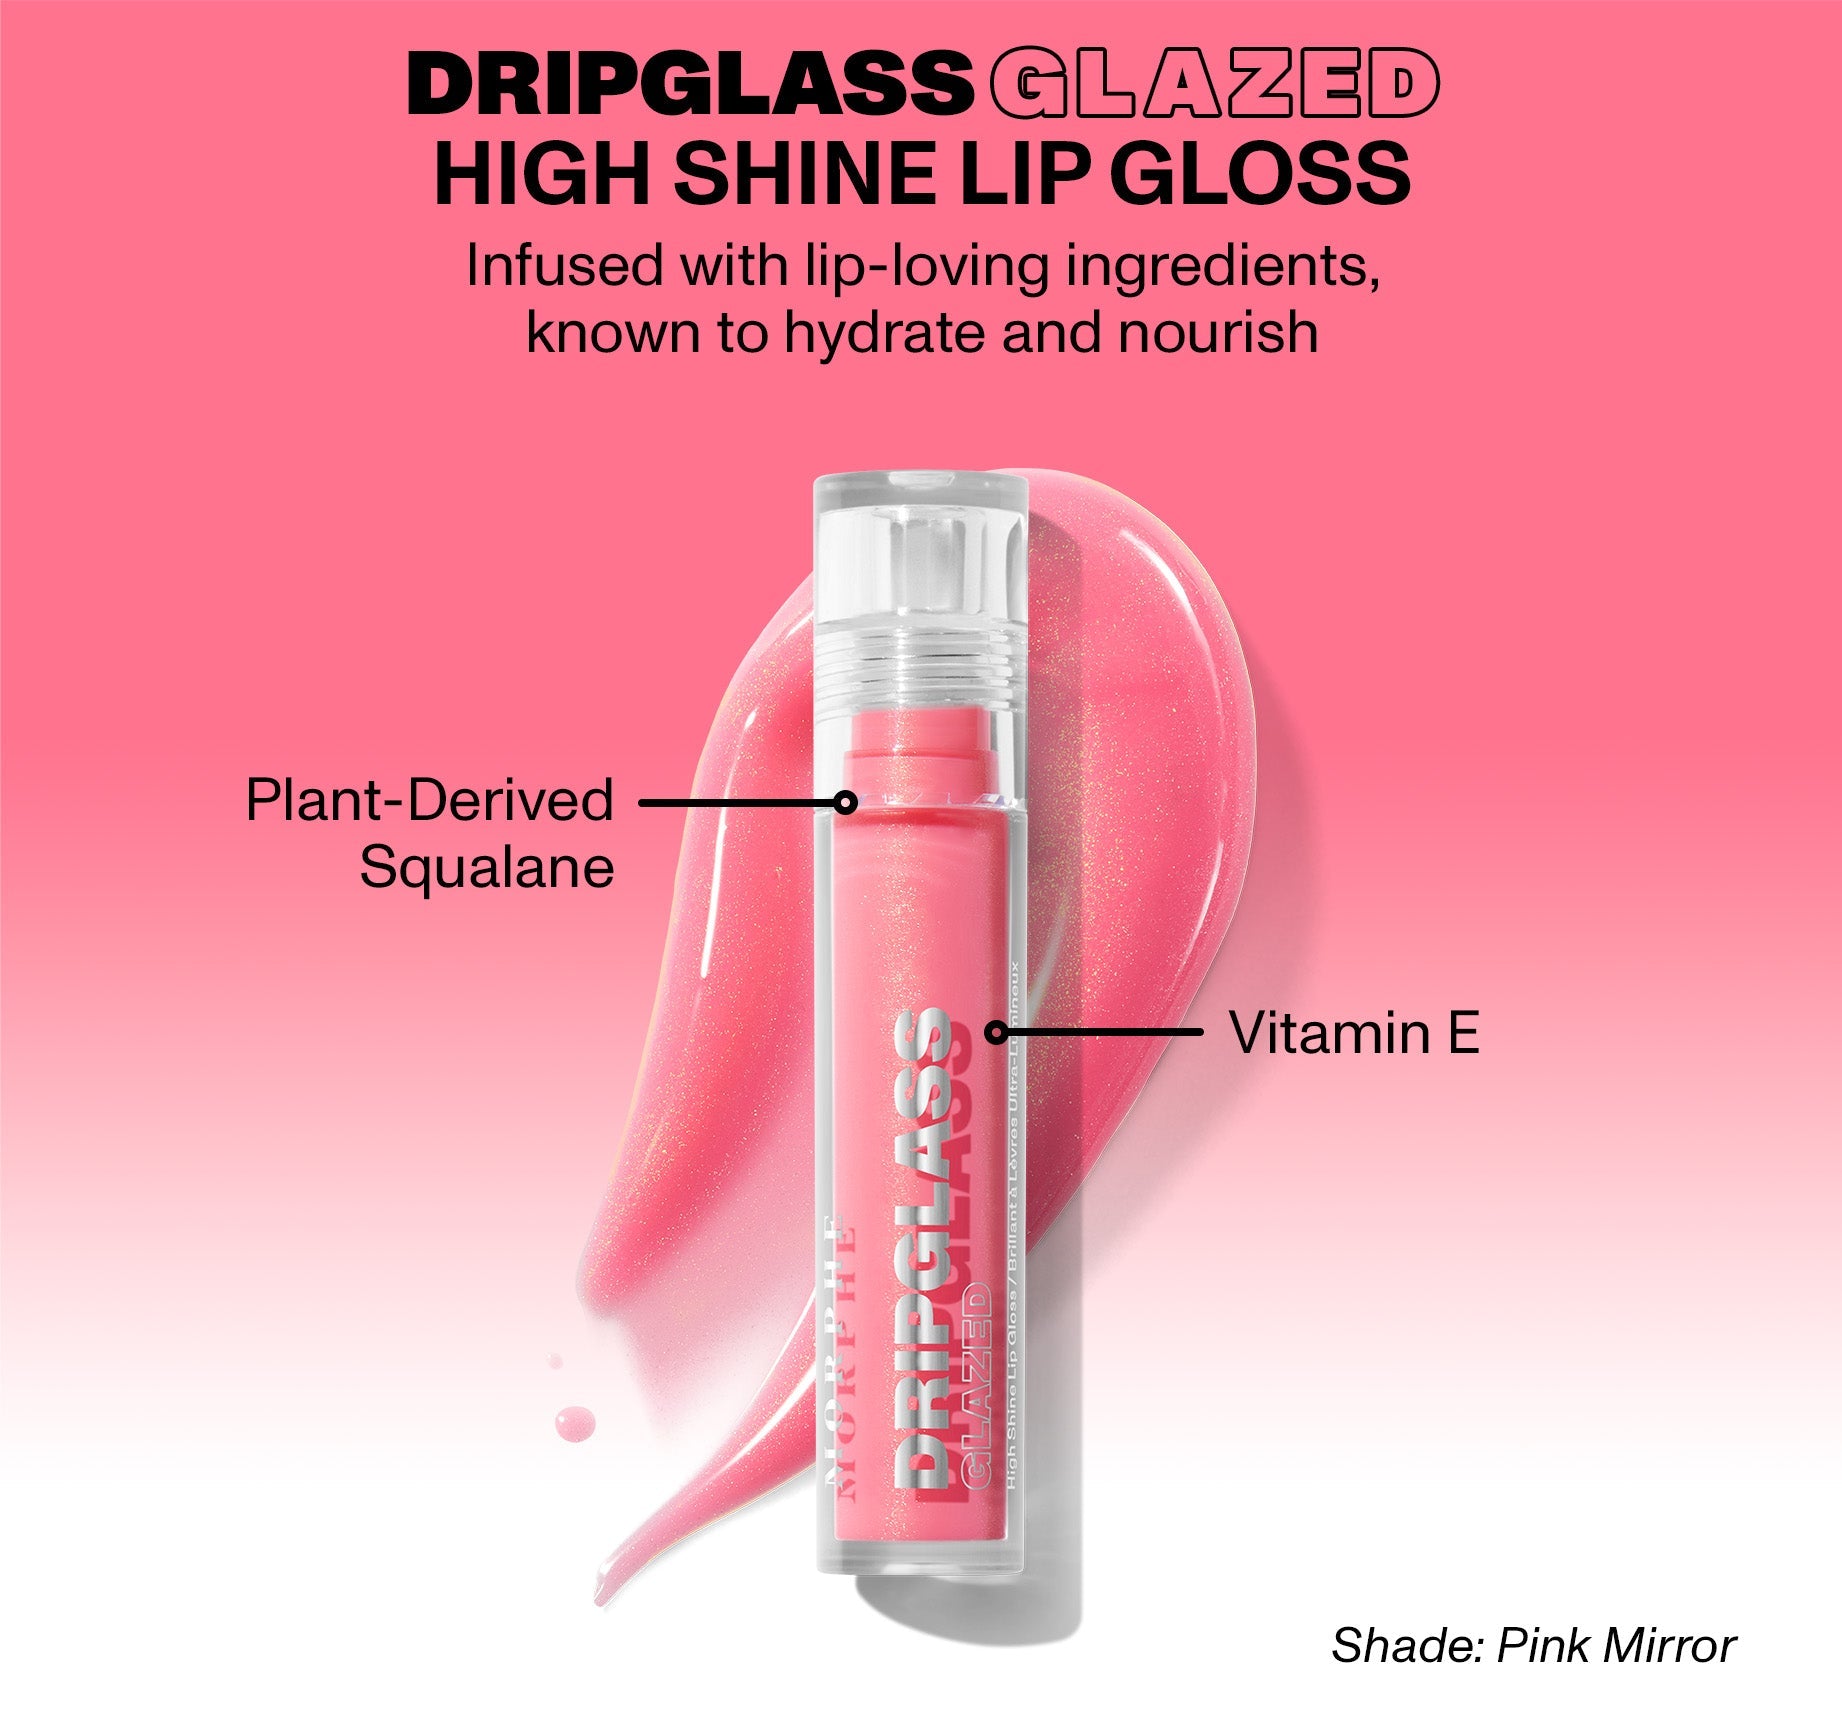 Dripglass Glazed High Shine Lip Gloss - Shatterproof Mauve - Image 9